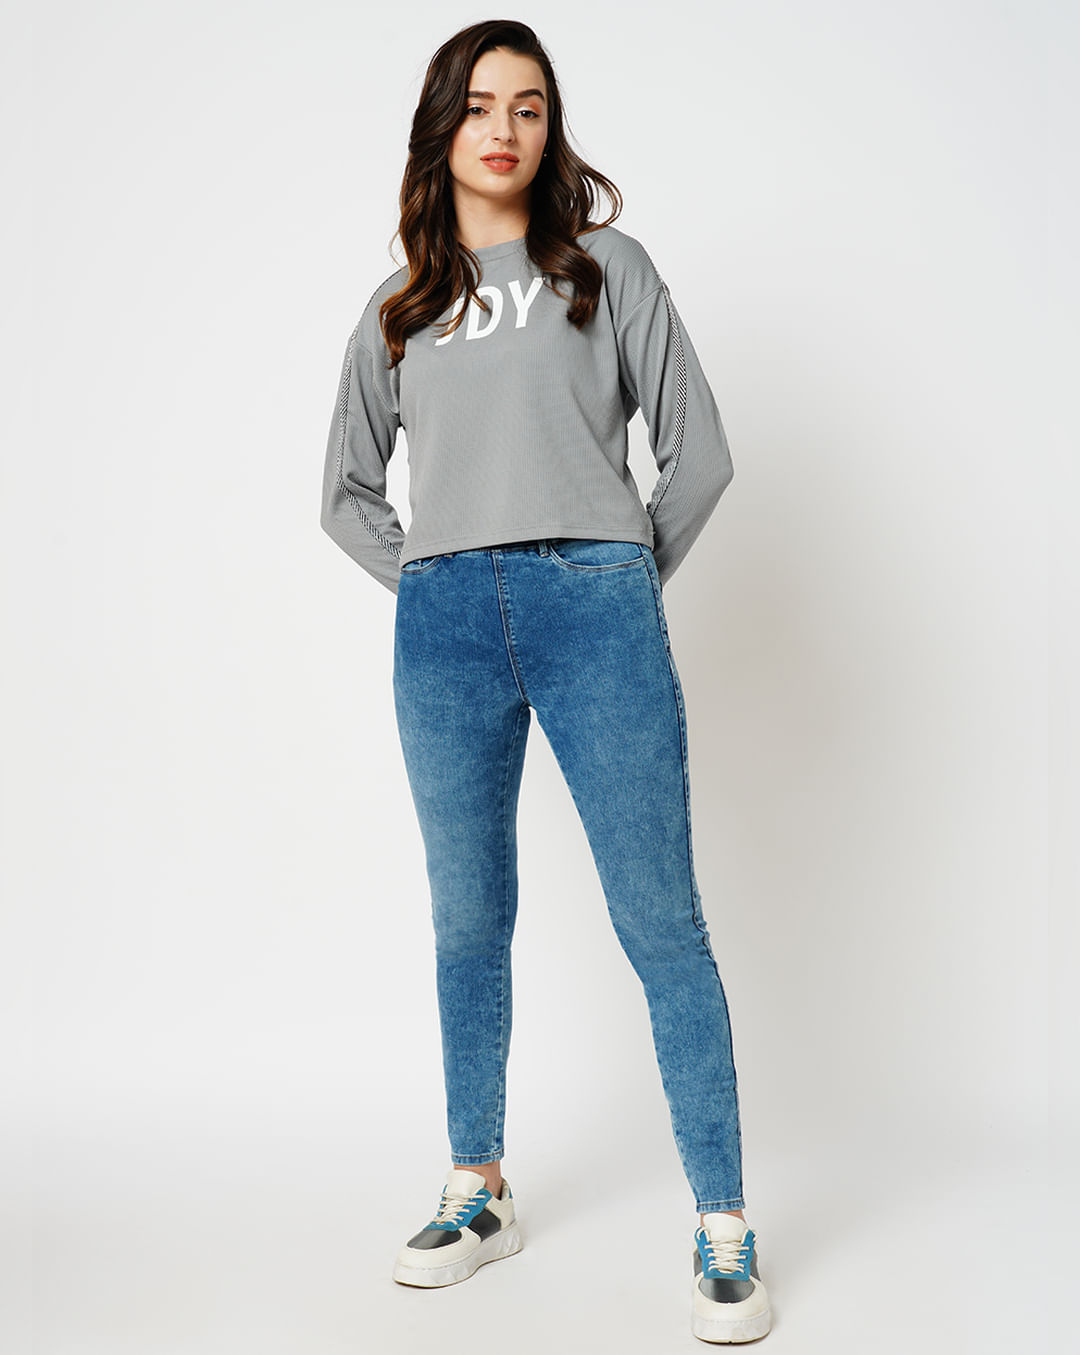 DISOLVE Present Women Denim Print Fake Jeans Look Like Legging Stretchy  High Waist Slim Skinny Printed Jeggings Free Size (28 Till 32) Blue Color  Pack of 1 : : Fashion